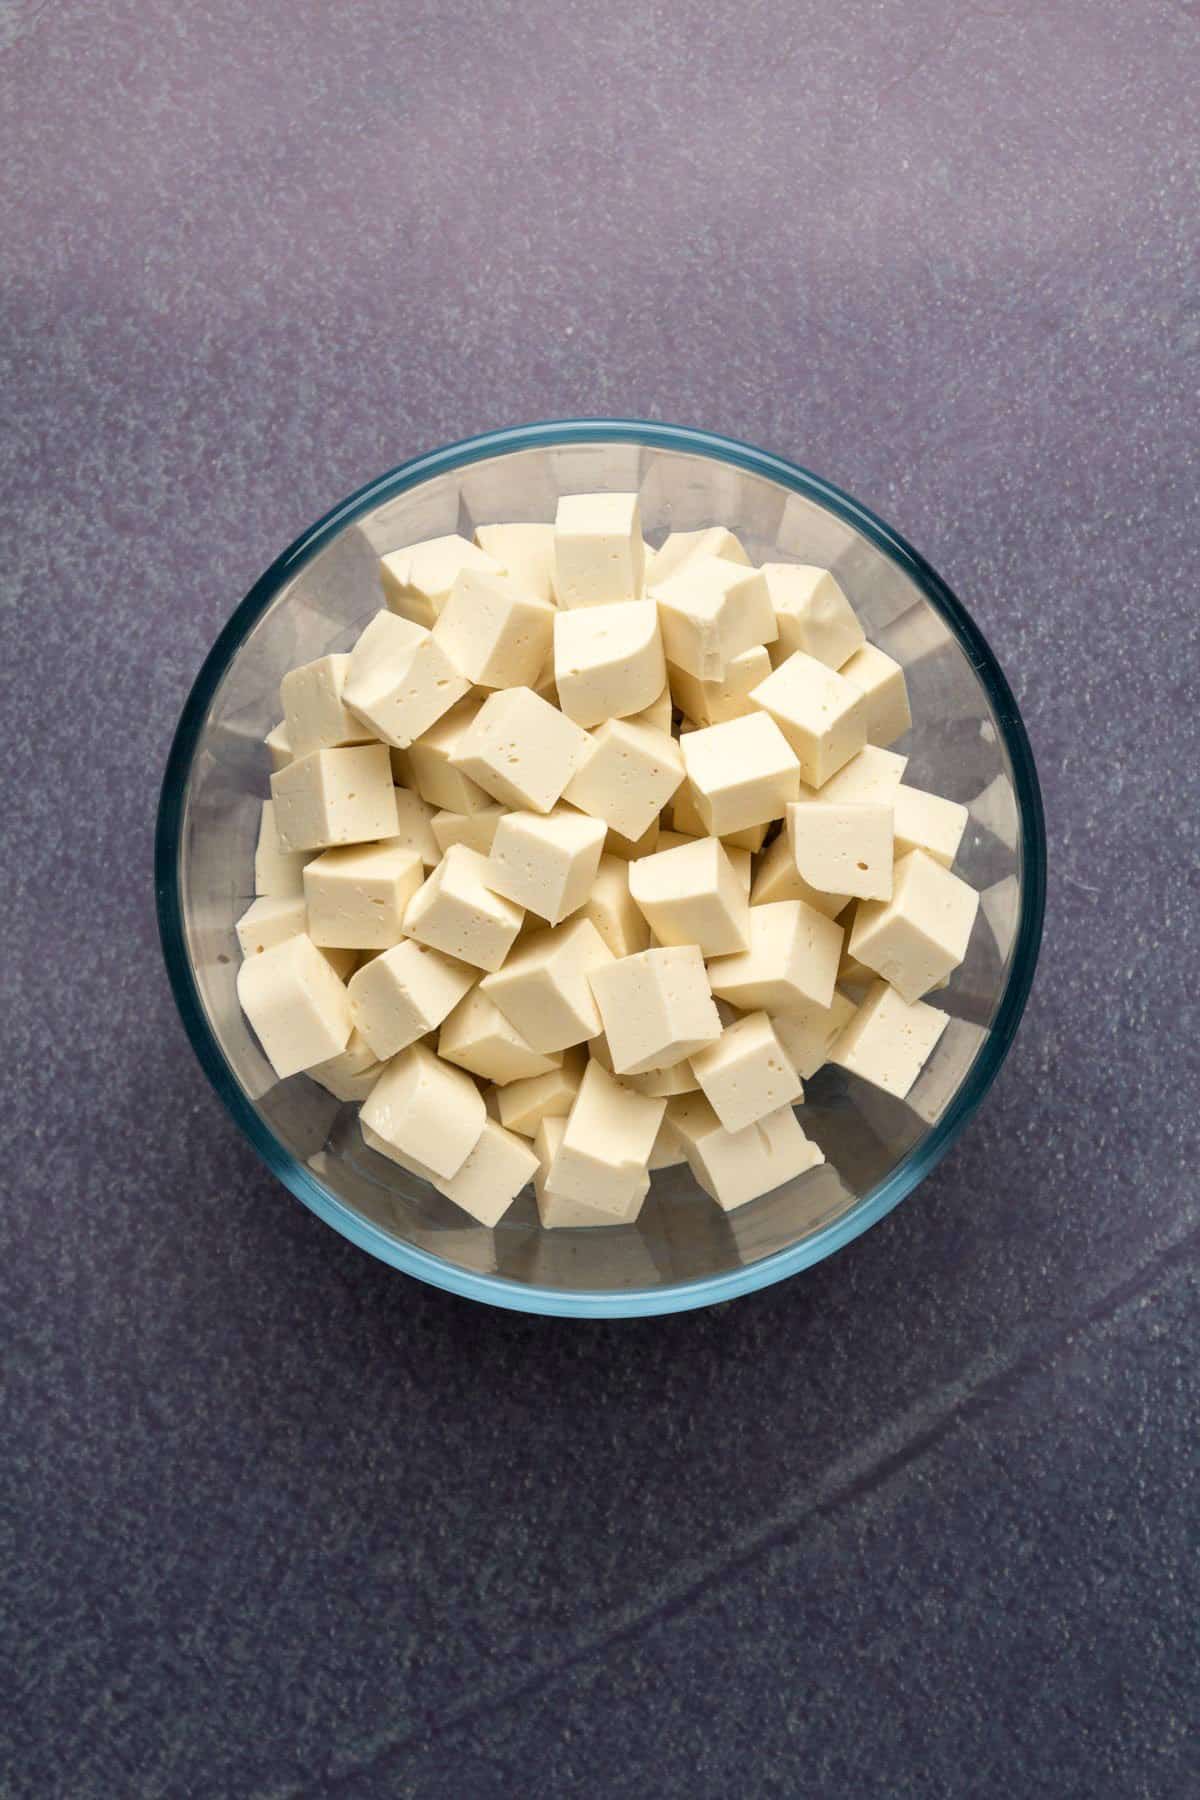 Cubes of vegan feta in a glass dish.